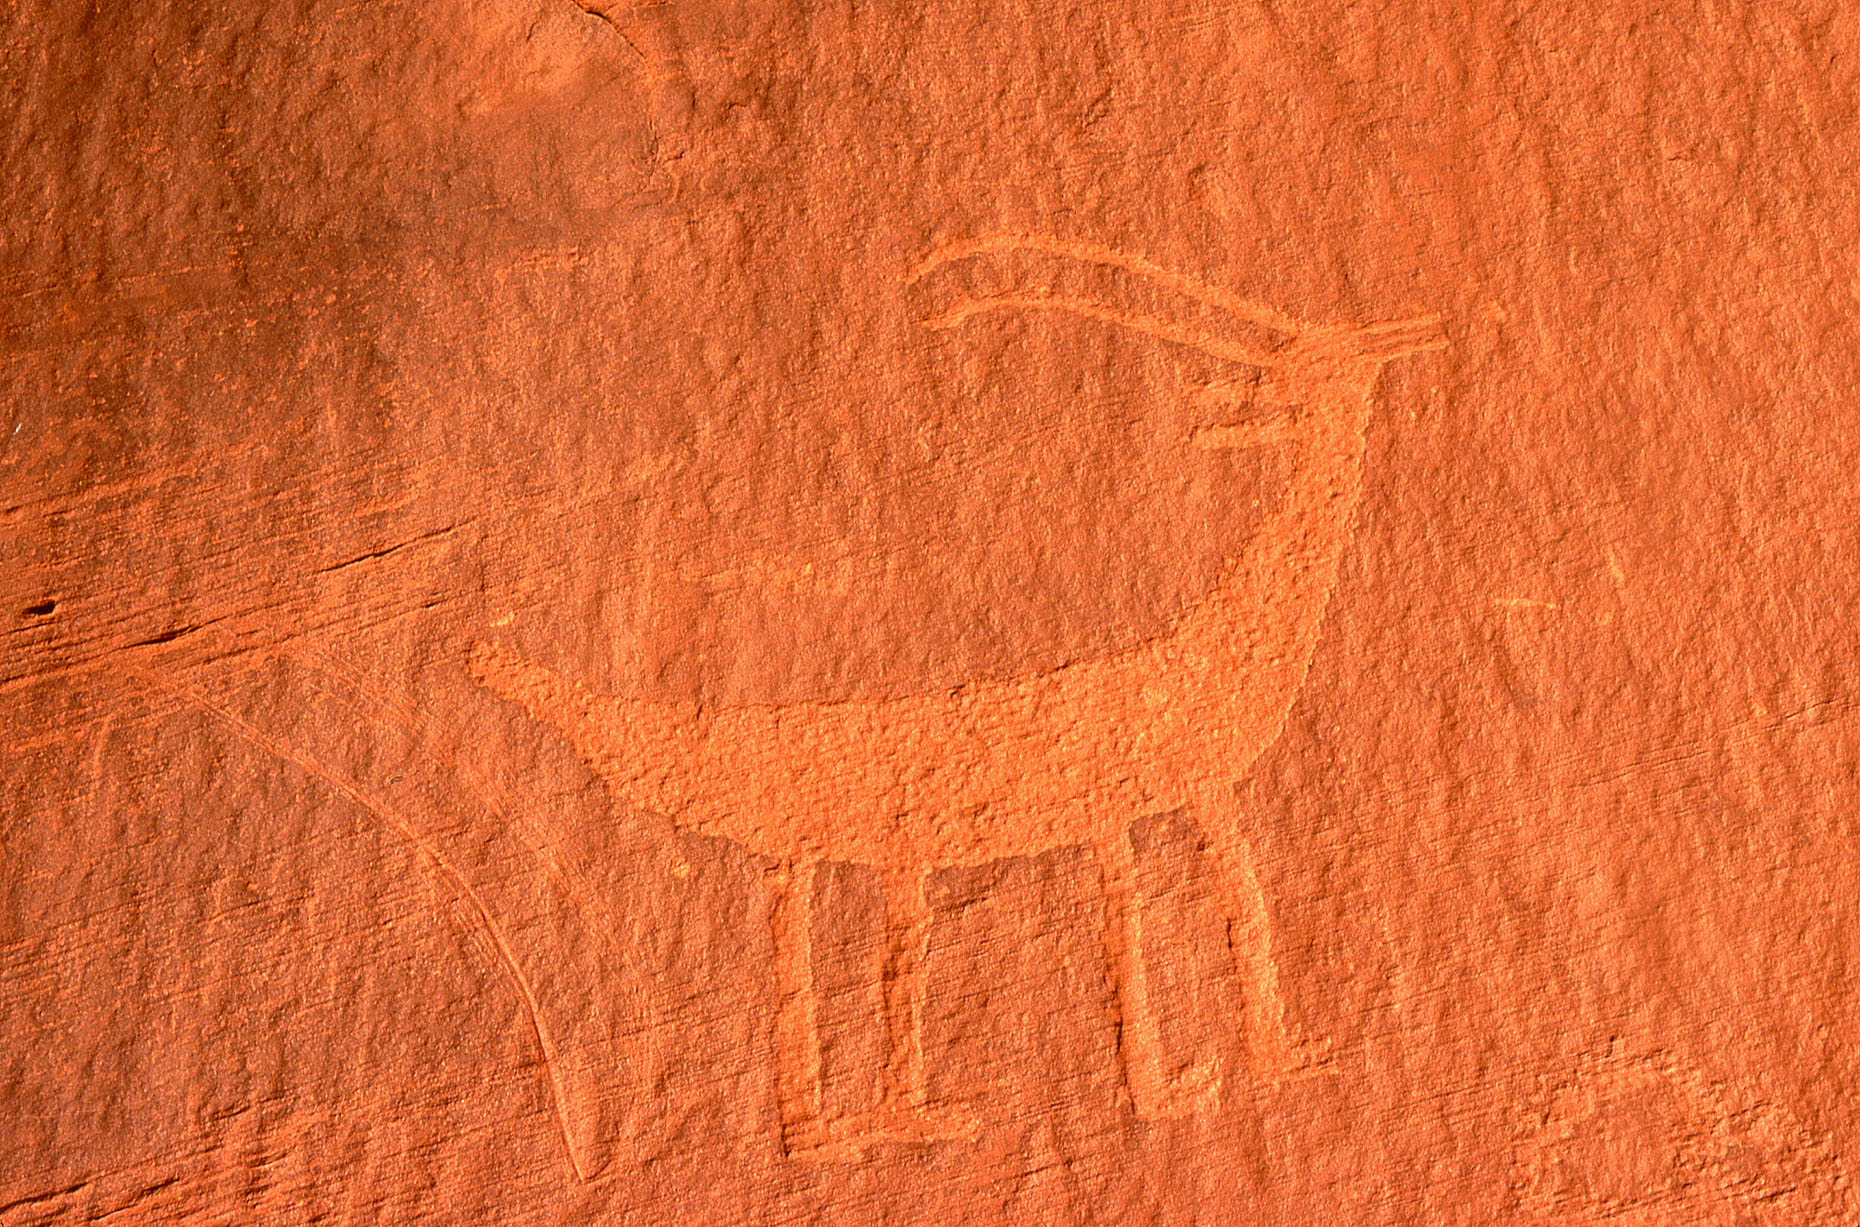 Bighorn sheep  petroglyph, John Annerino, Monument Valley Navajo Tribal Park, Utah-Arizona, Ancestral Puebloan stone etching